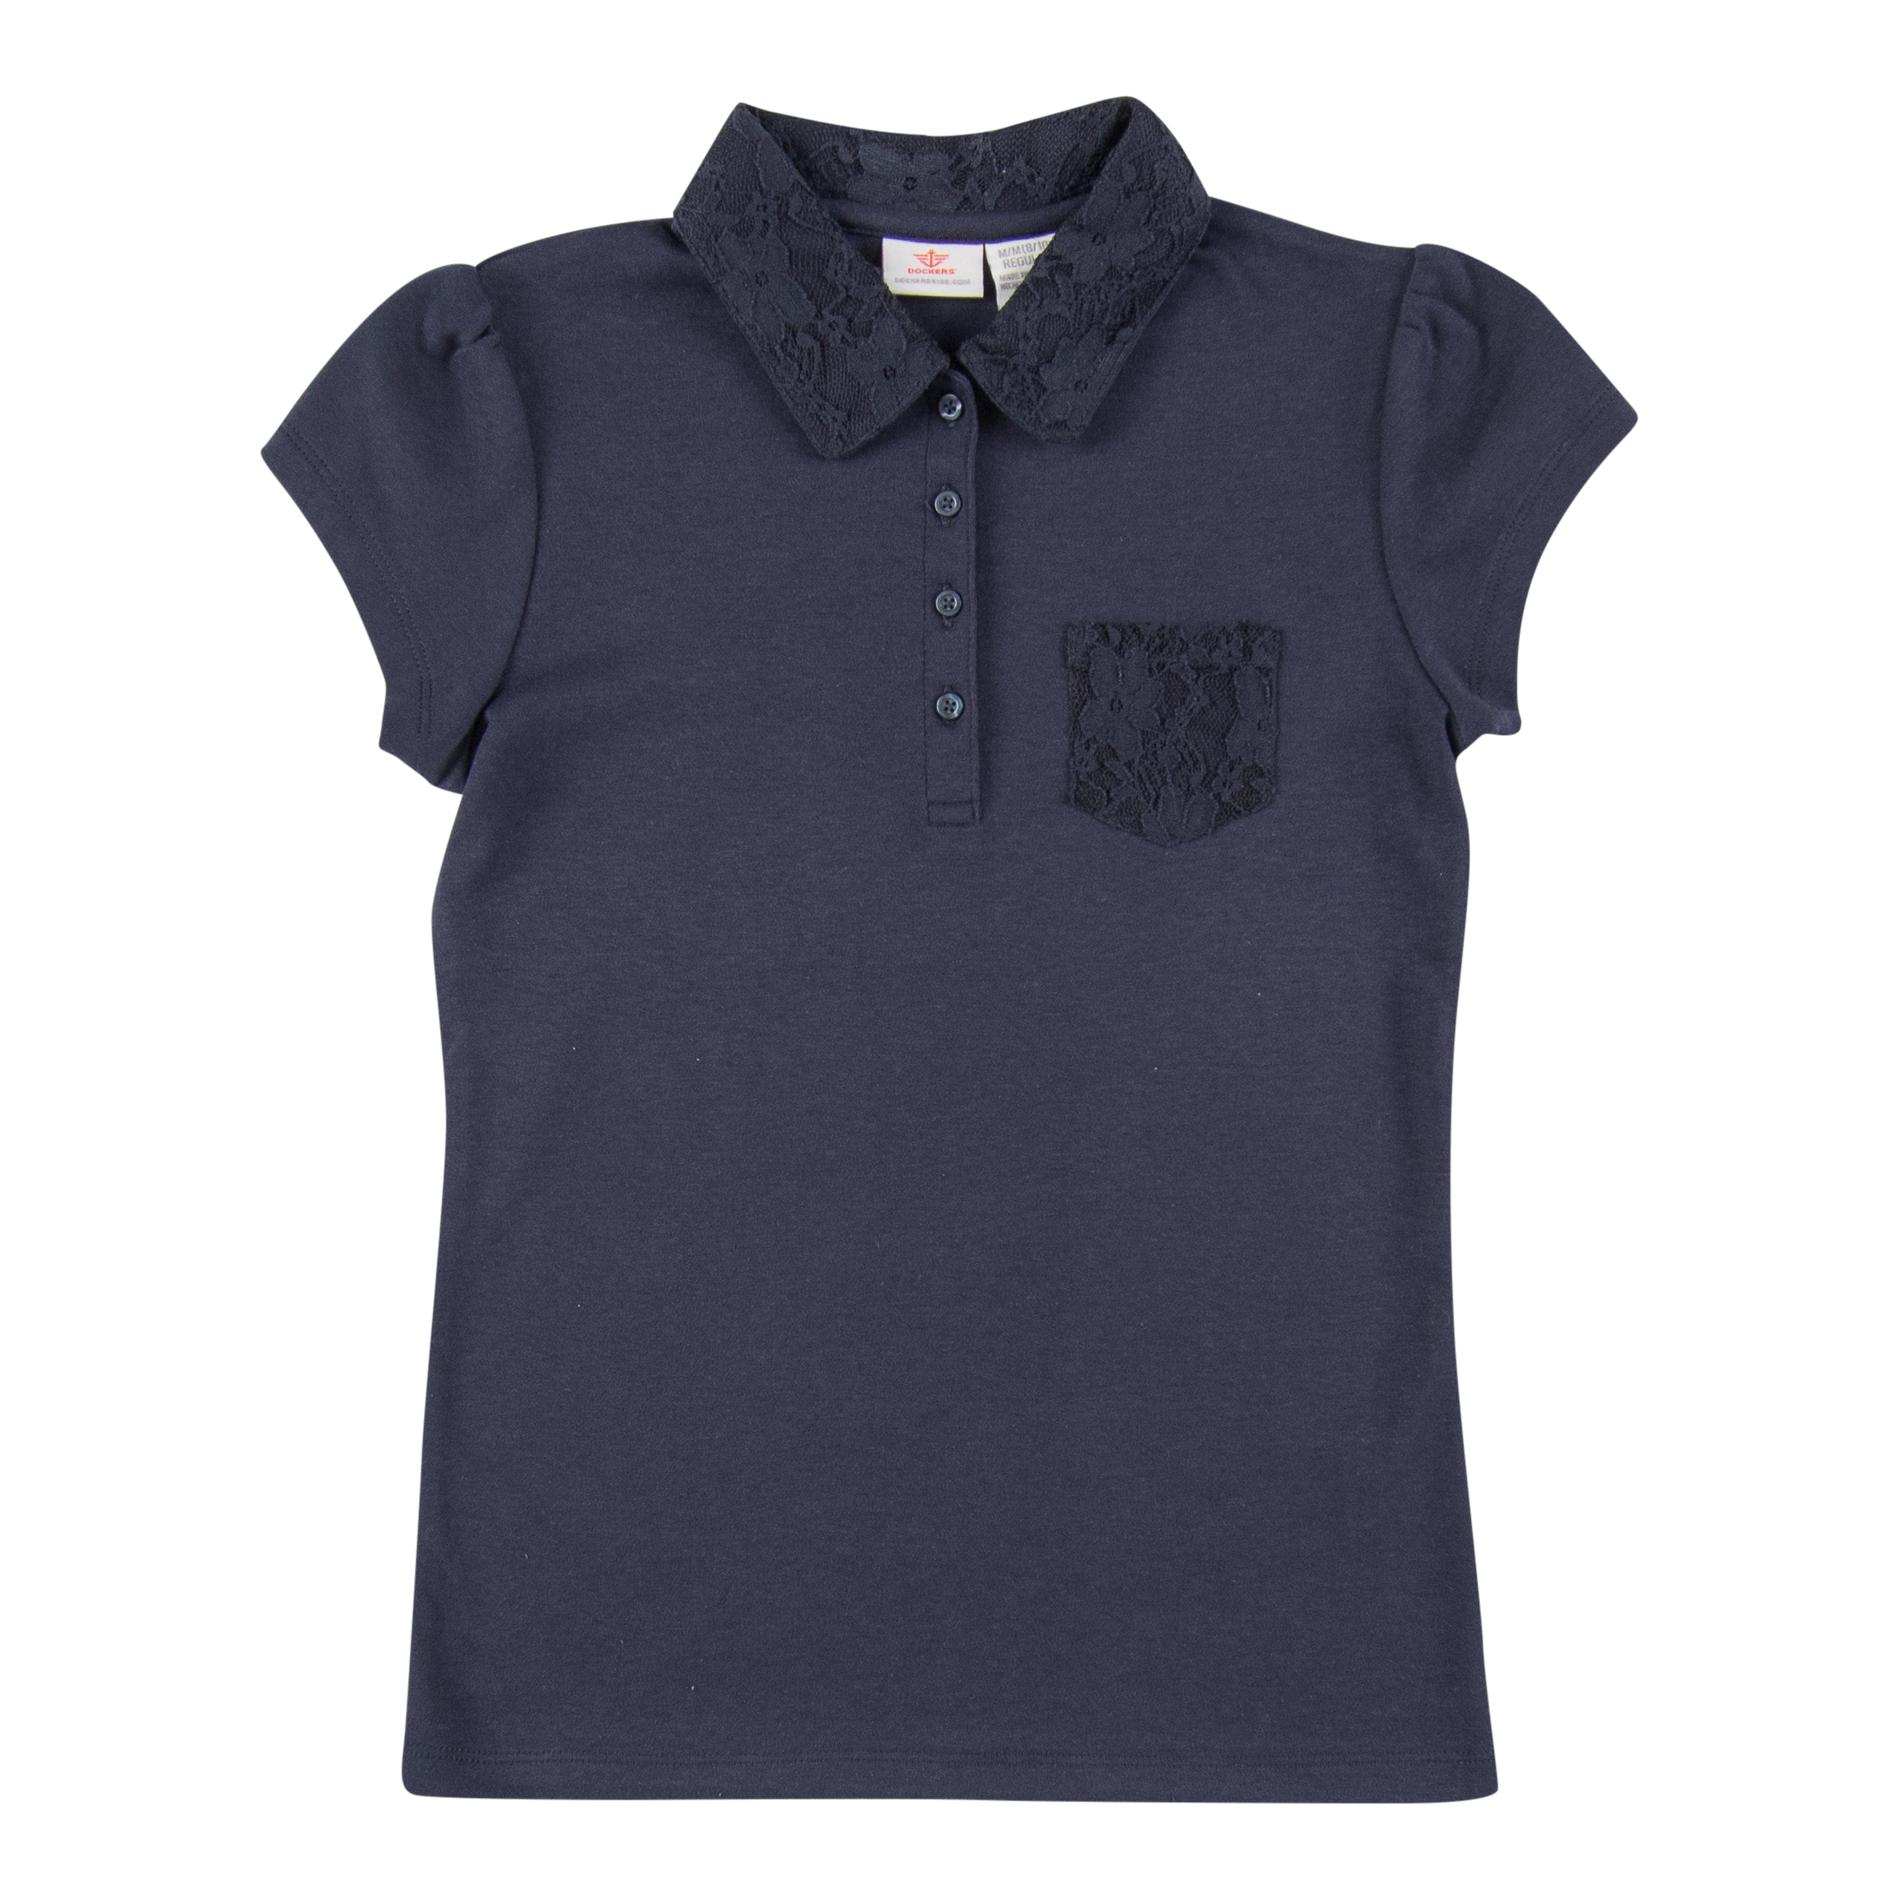 Dockers Girl's Embellished Polo Shirt